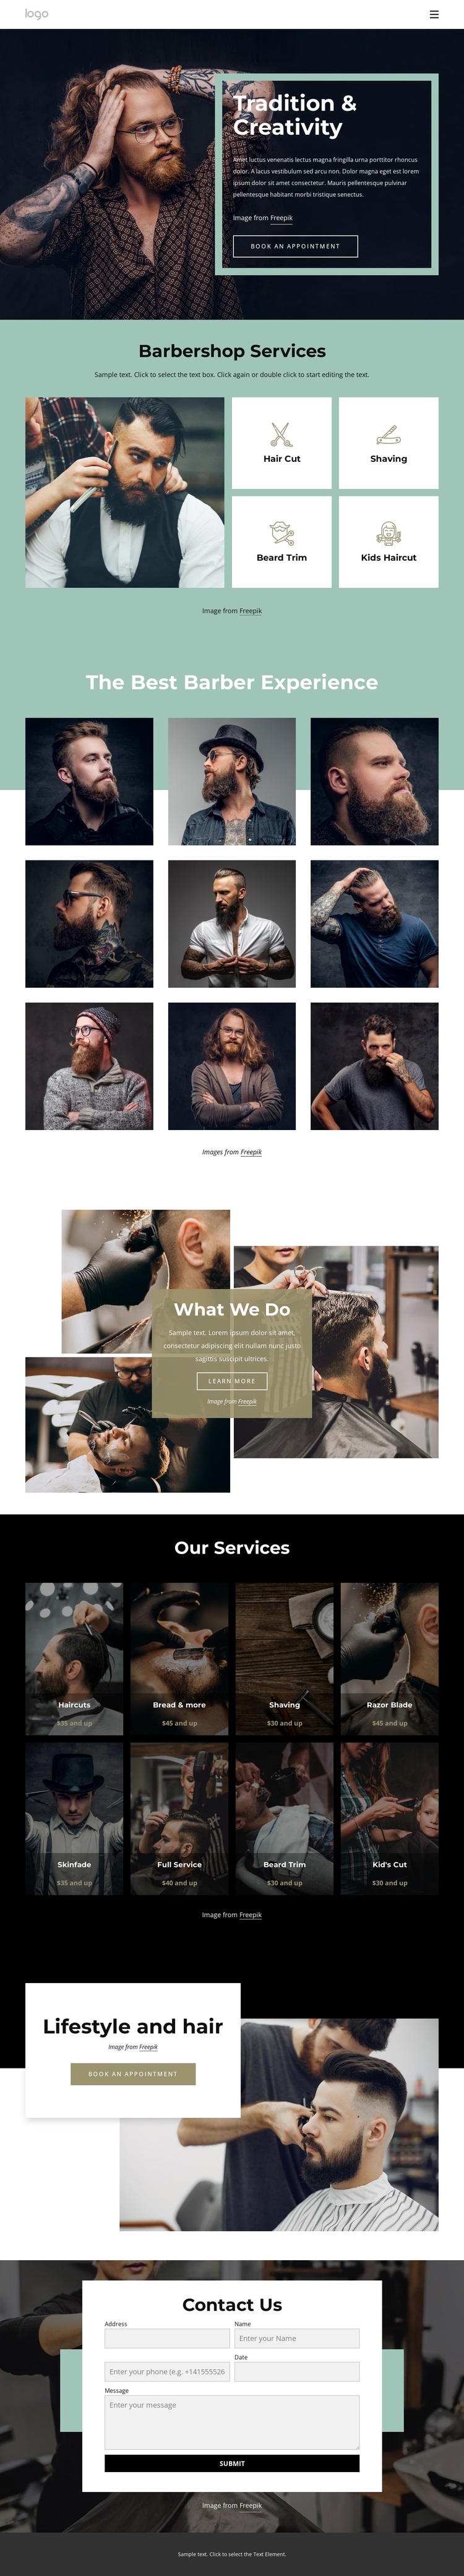 Public barber salon Joomla Page Builder